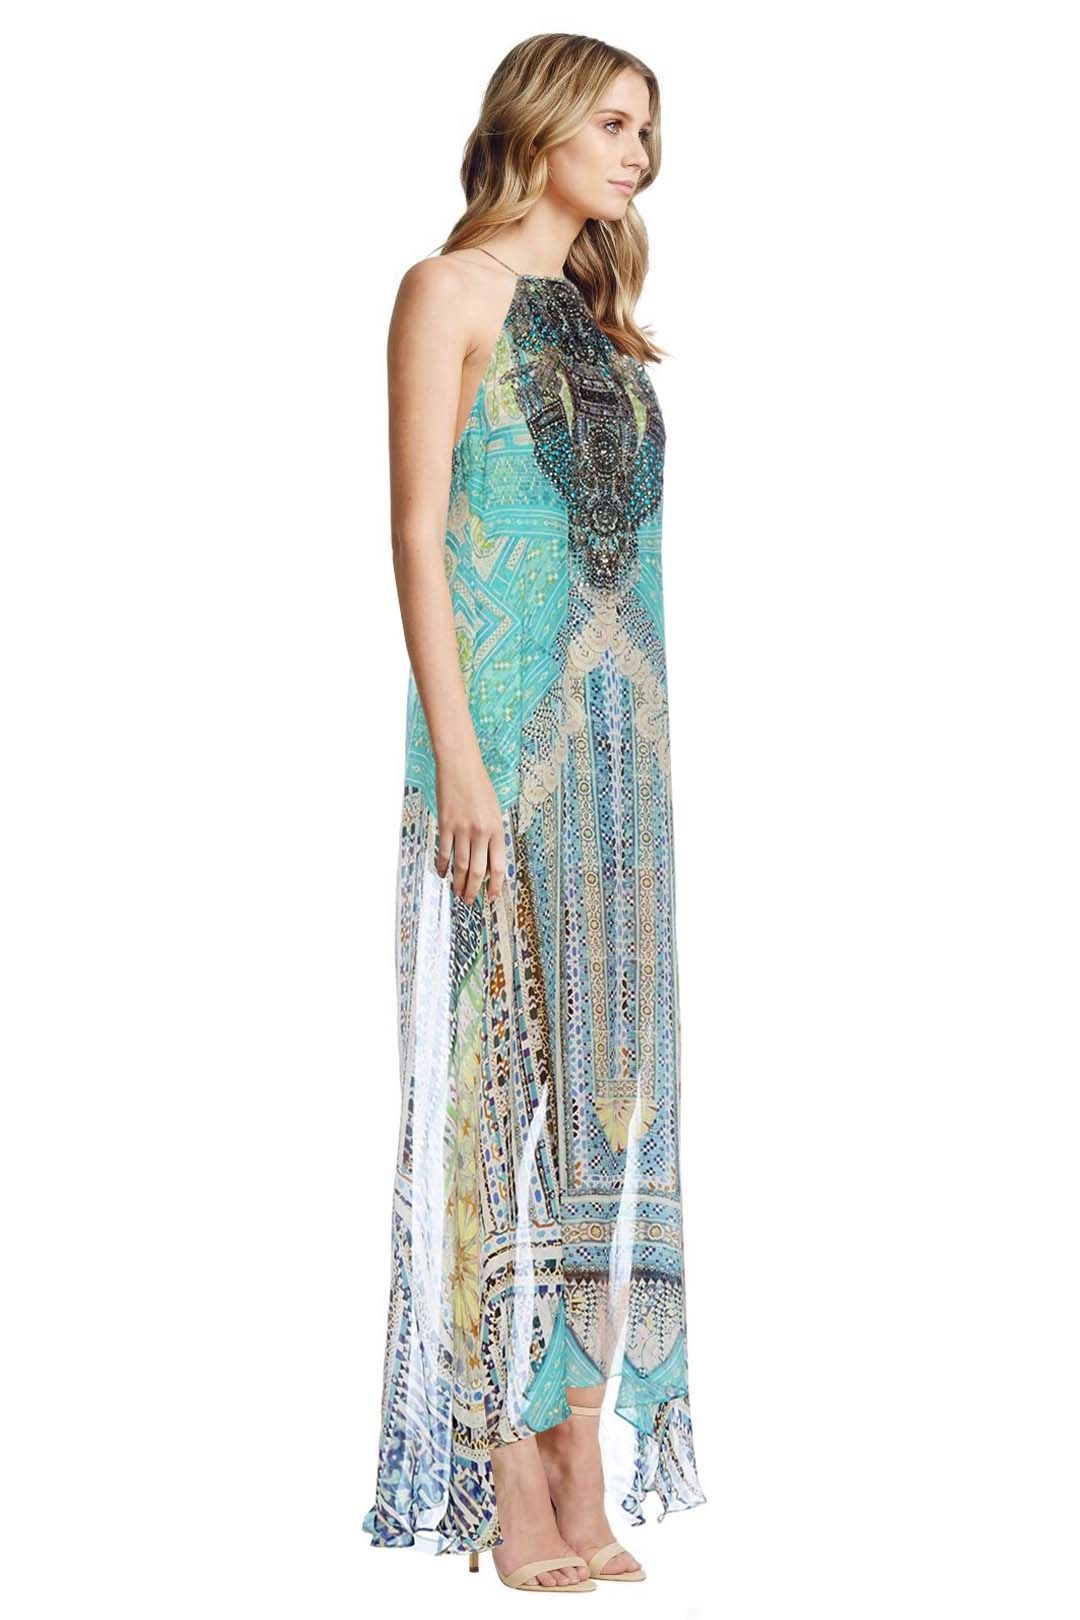 Camilla - Topkapi Thread Sheer Overlay Dress - Prints - Side